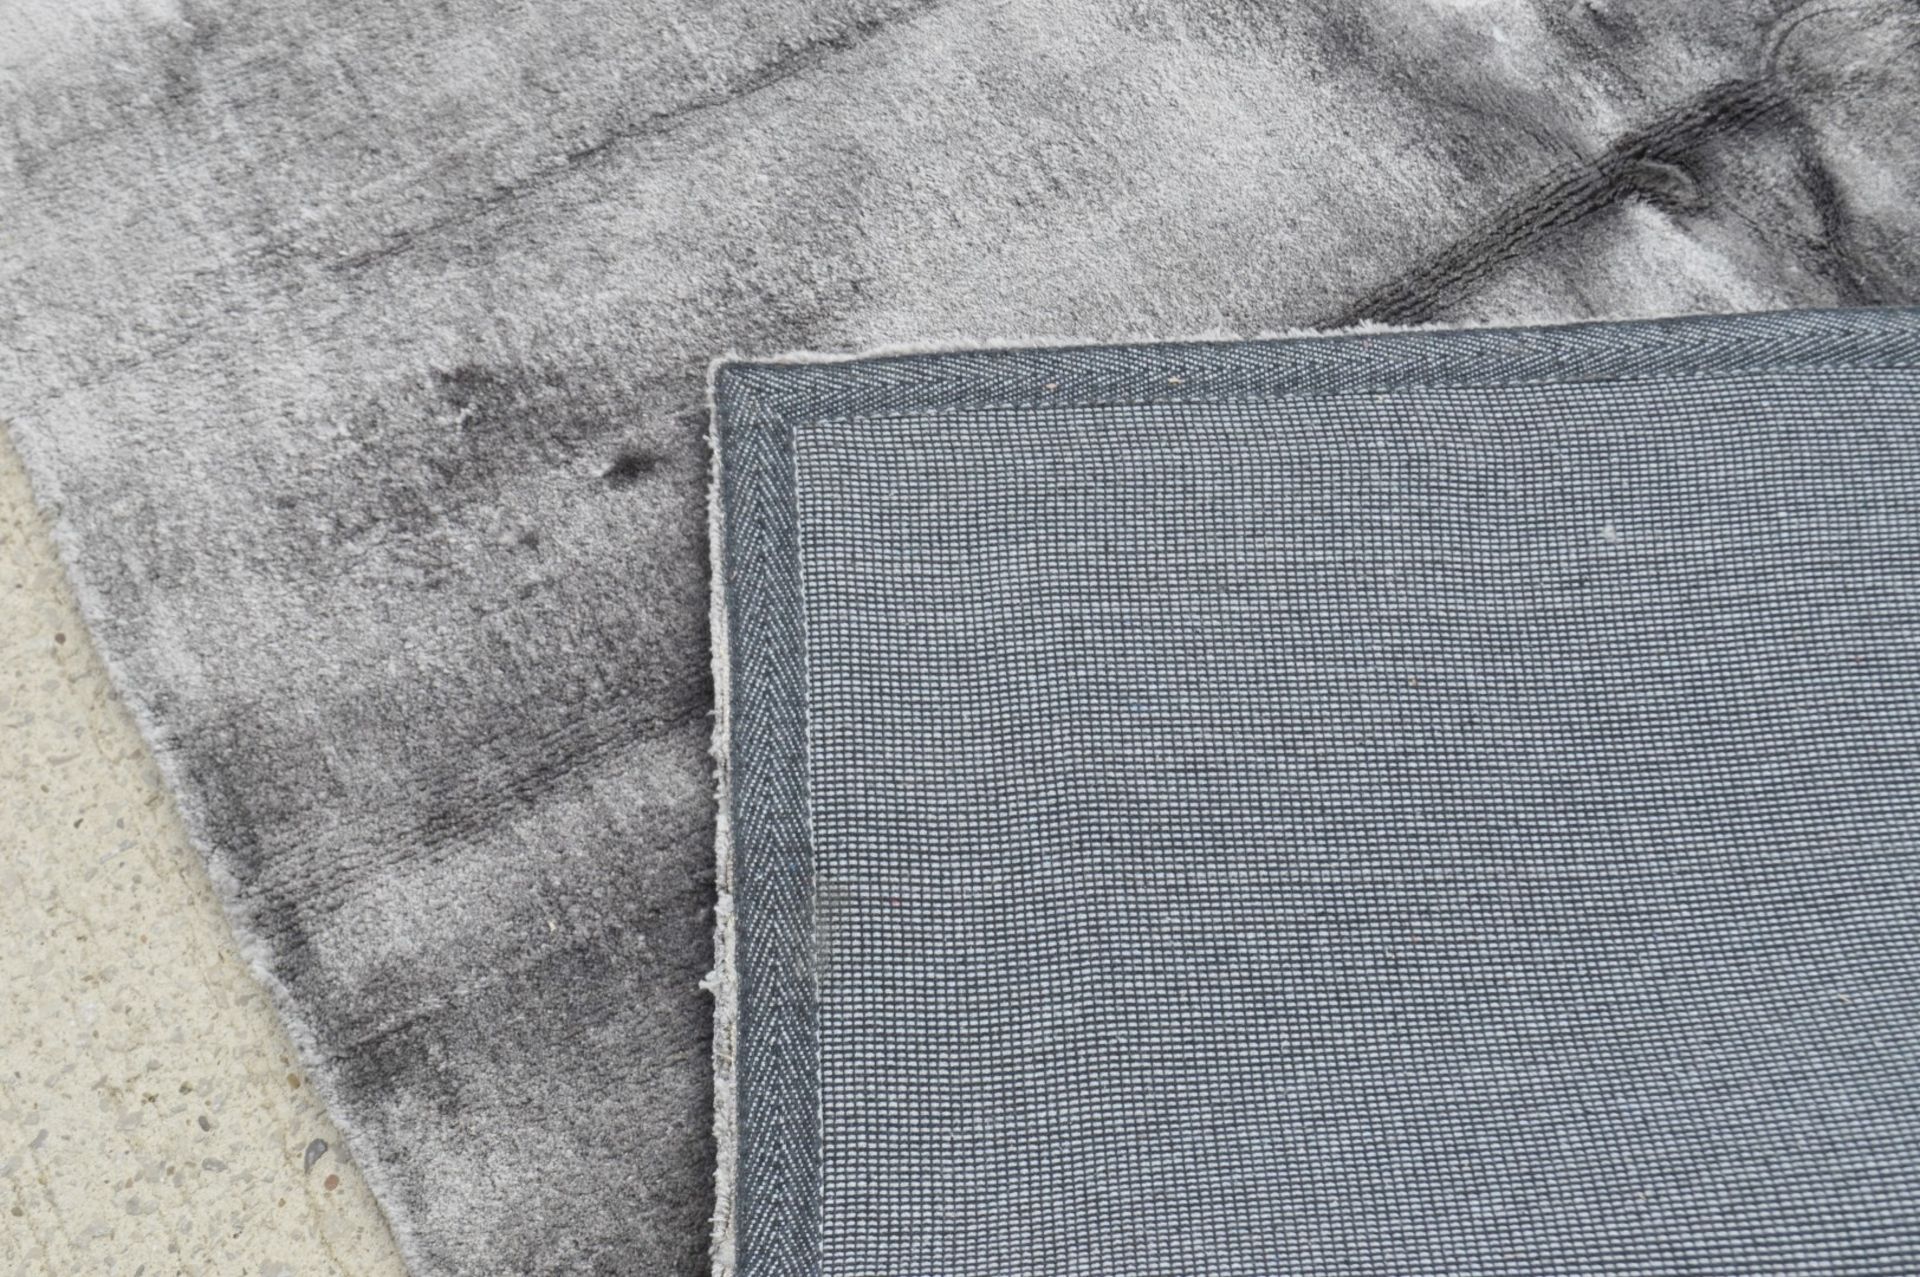 1 x PORADA 'Berry' Luxury Carpet Rug In A Rich Graphite Grey Tone - 160x230cm - Original RRP £1,119 - Image 7 of 7